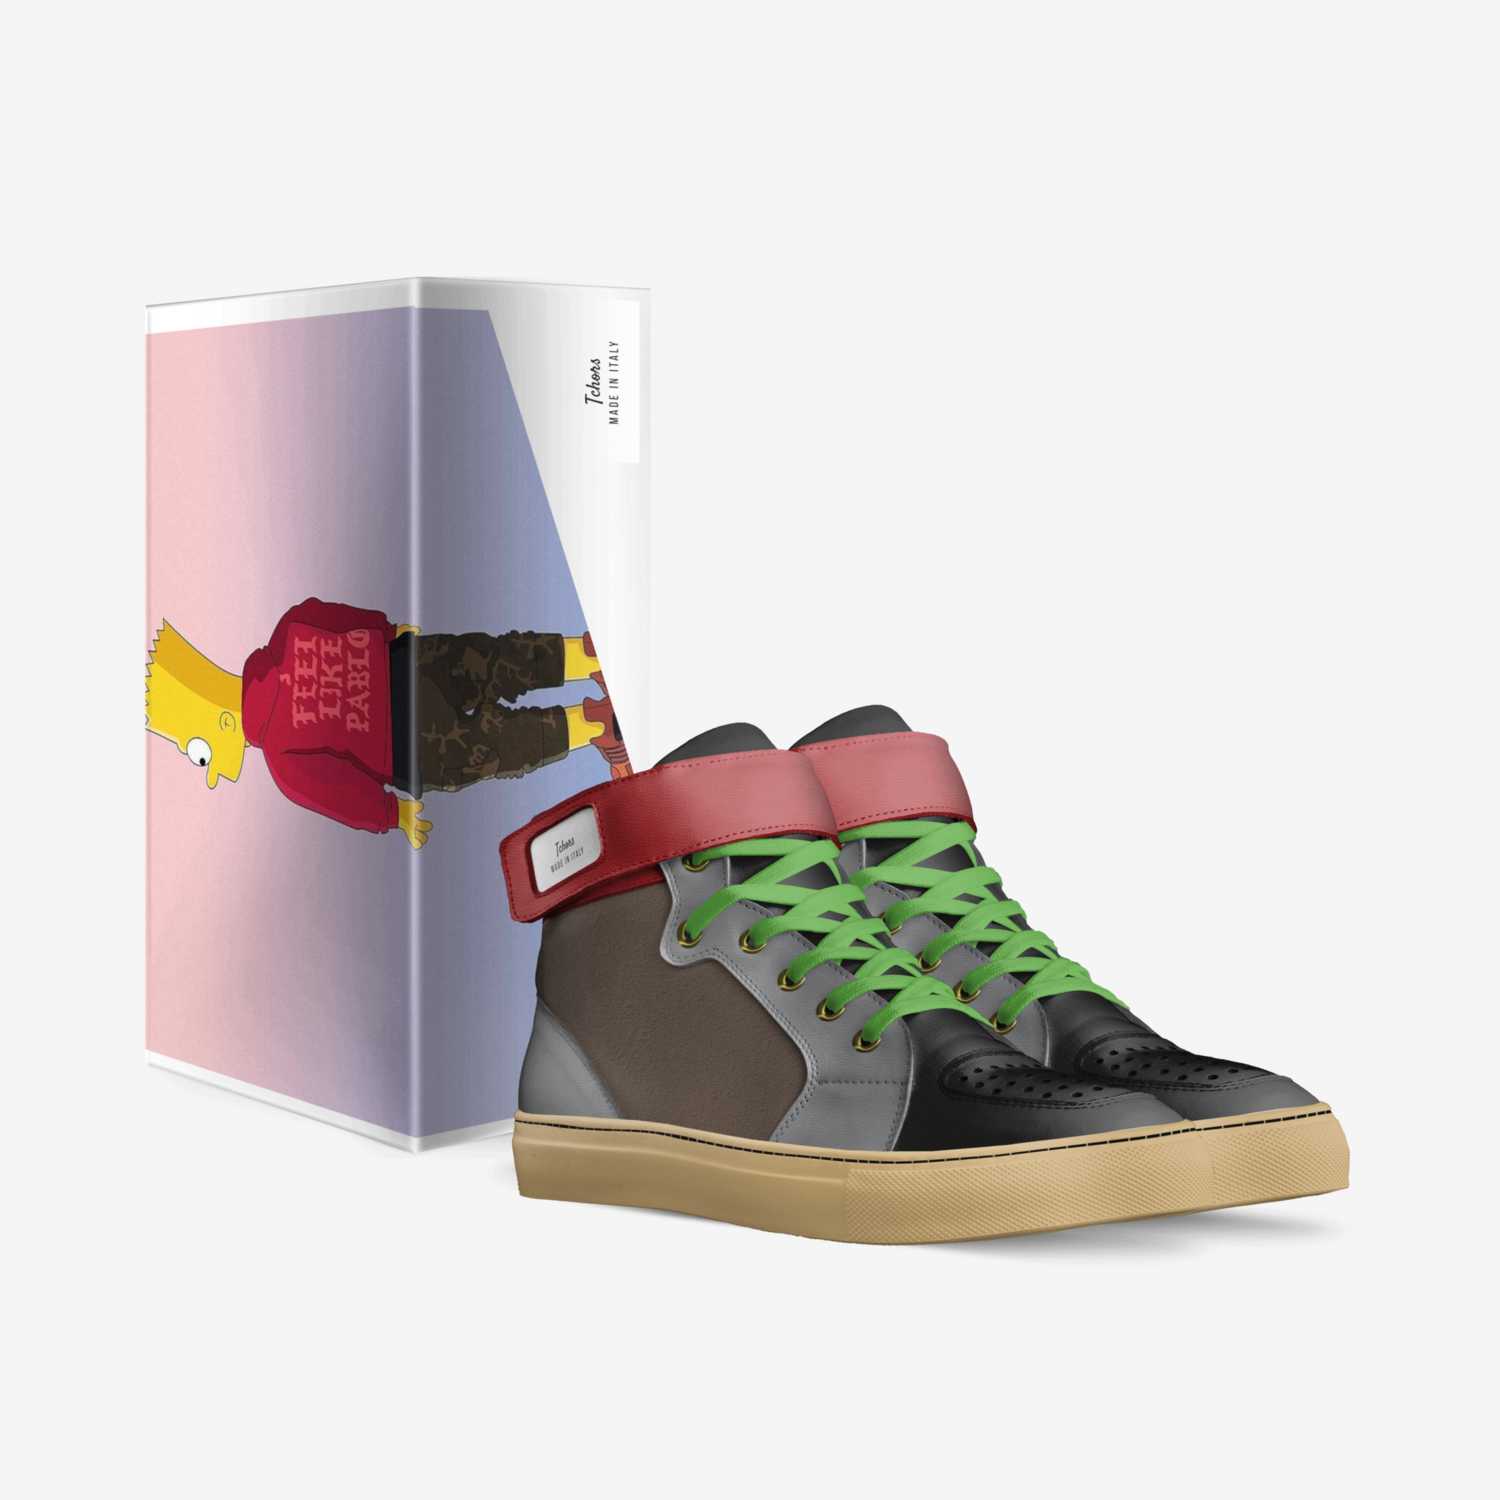 Tchors custom made in Italy shoes by Jordan Tchorlian | Box view